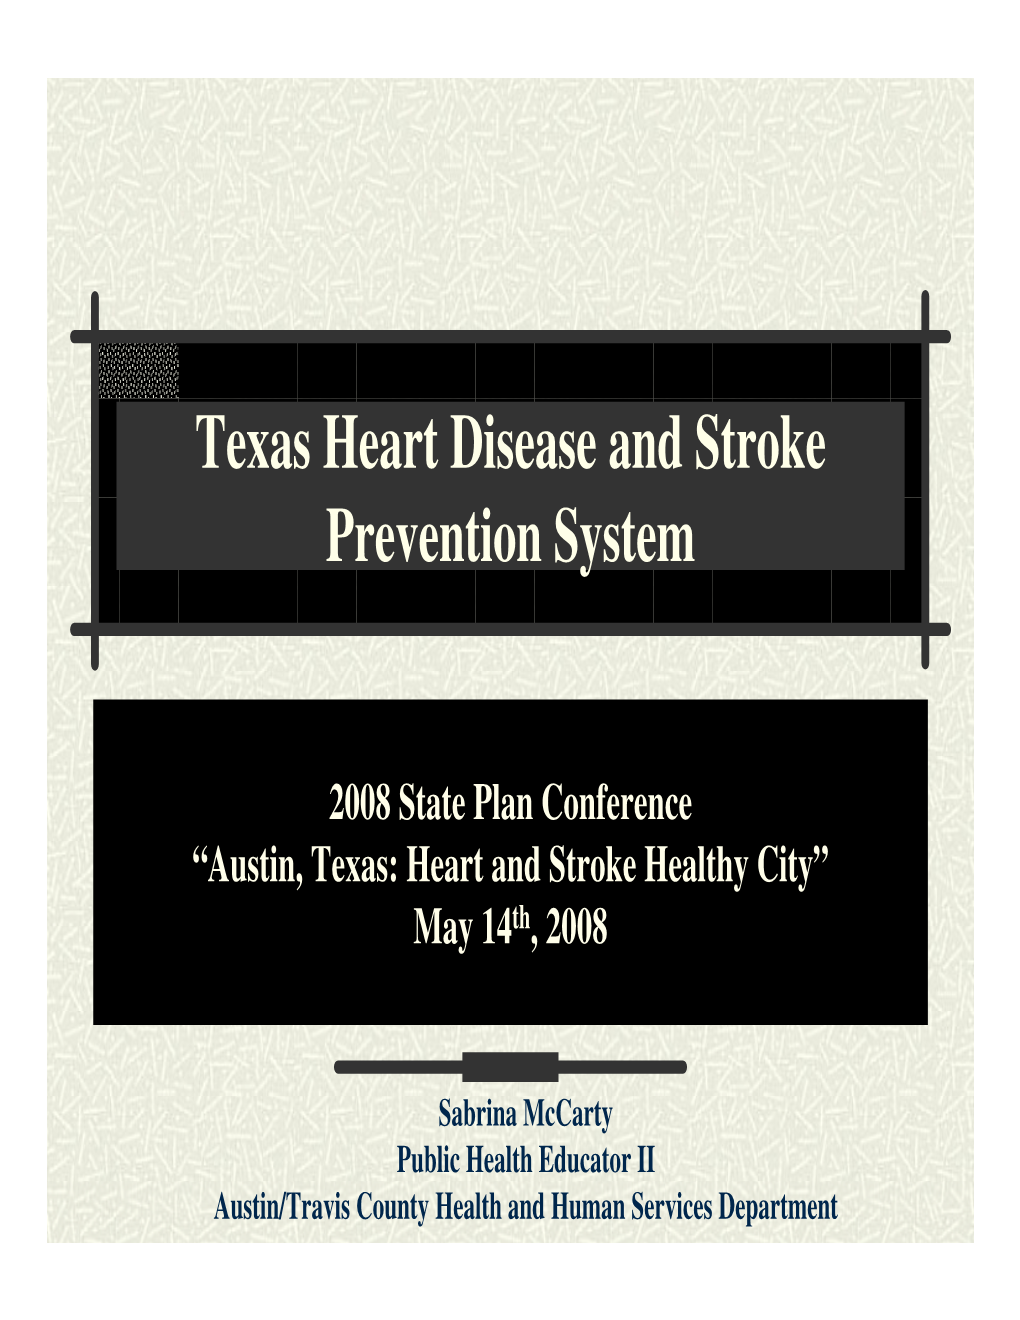 Austin, Texas: Heart and Stroke Healthy City” May 14Th, 2008